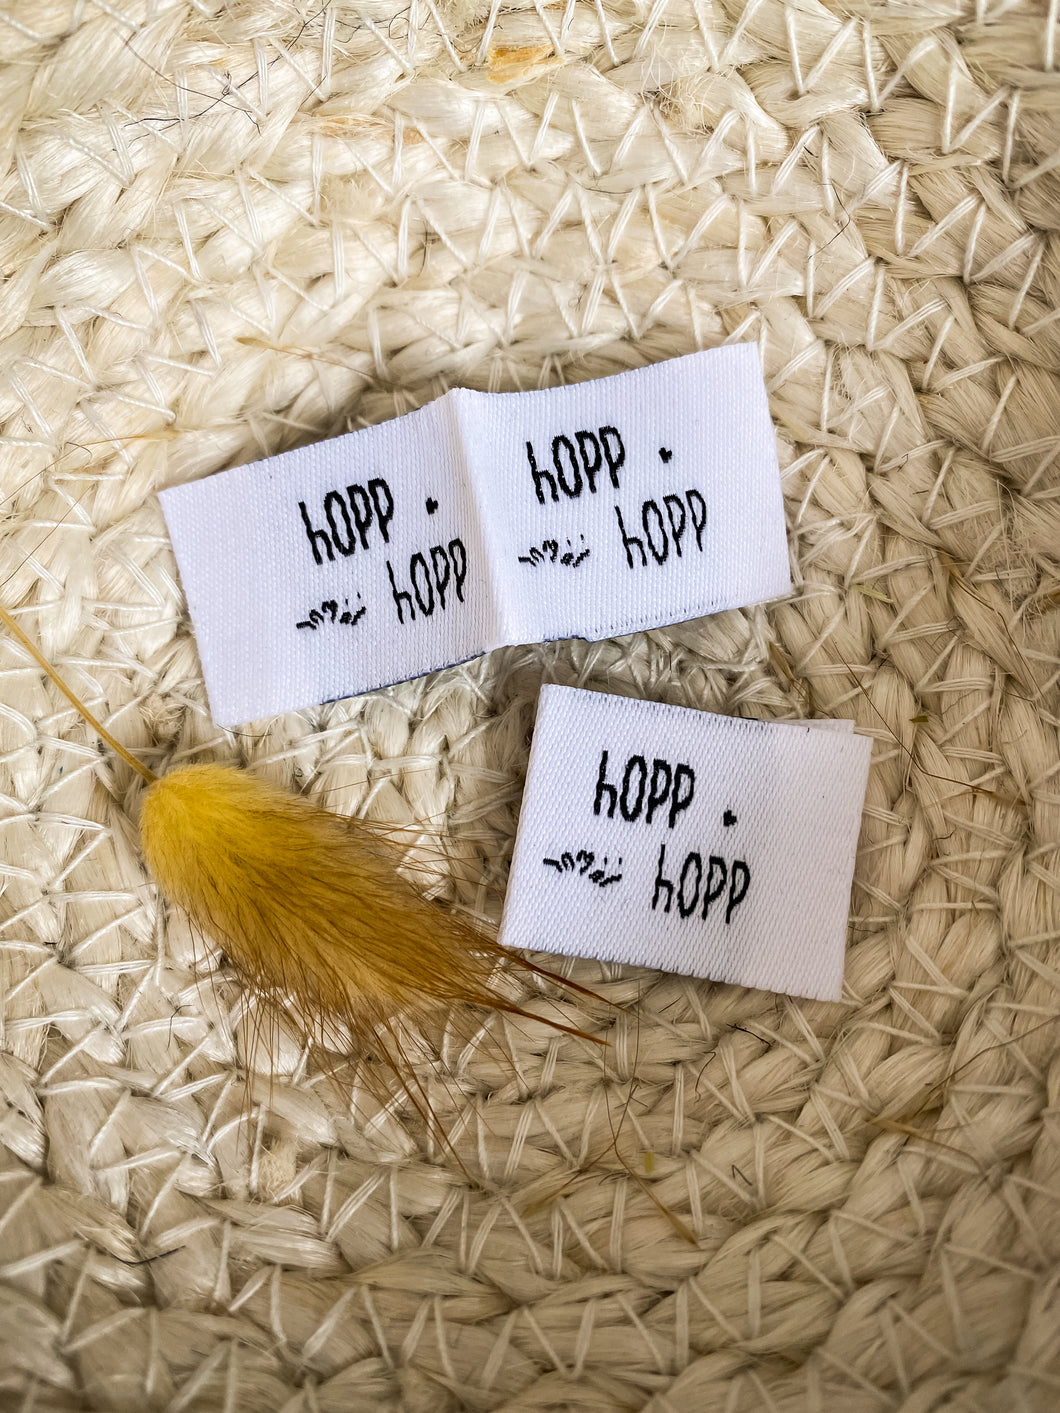 Hopp hopp Label